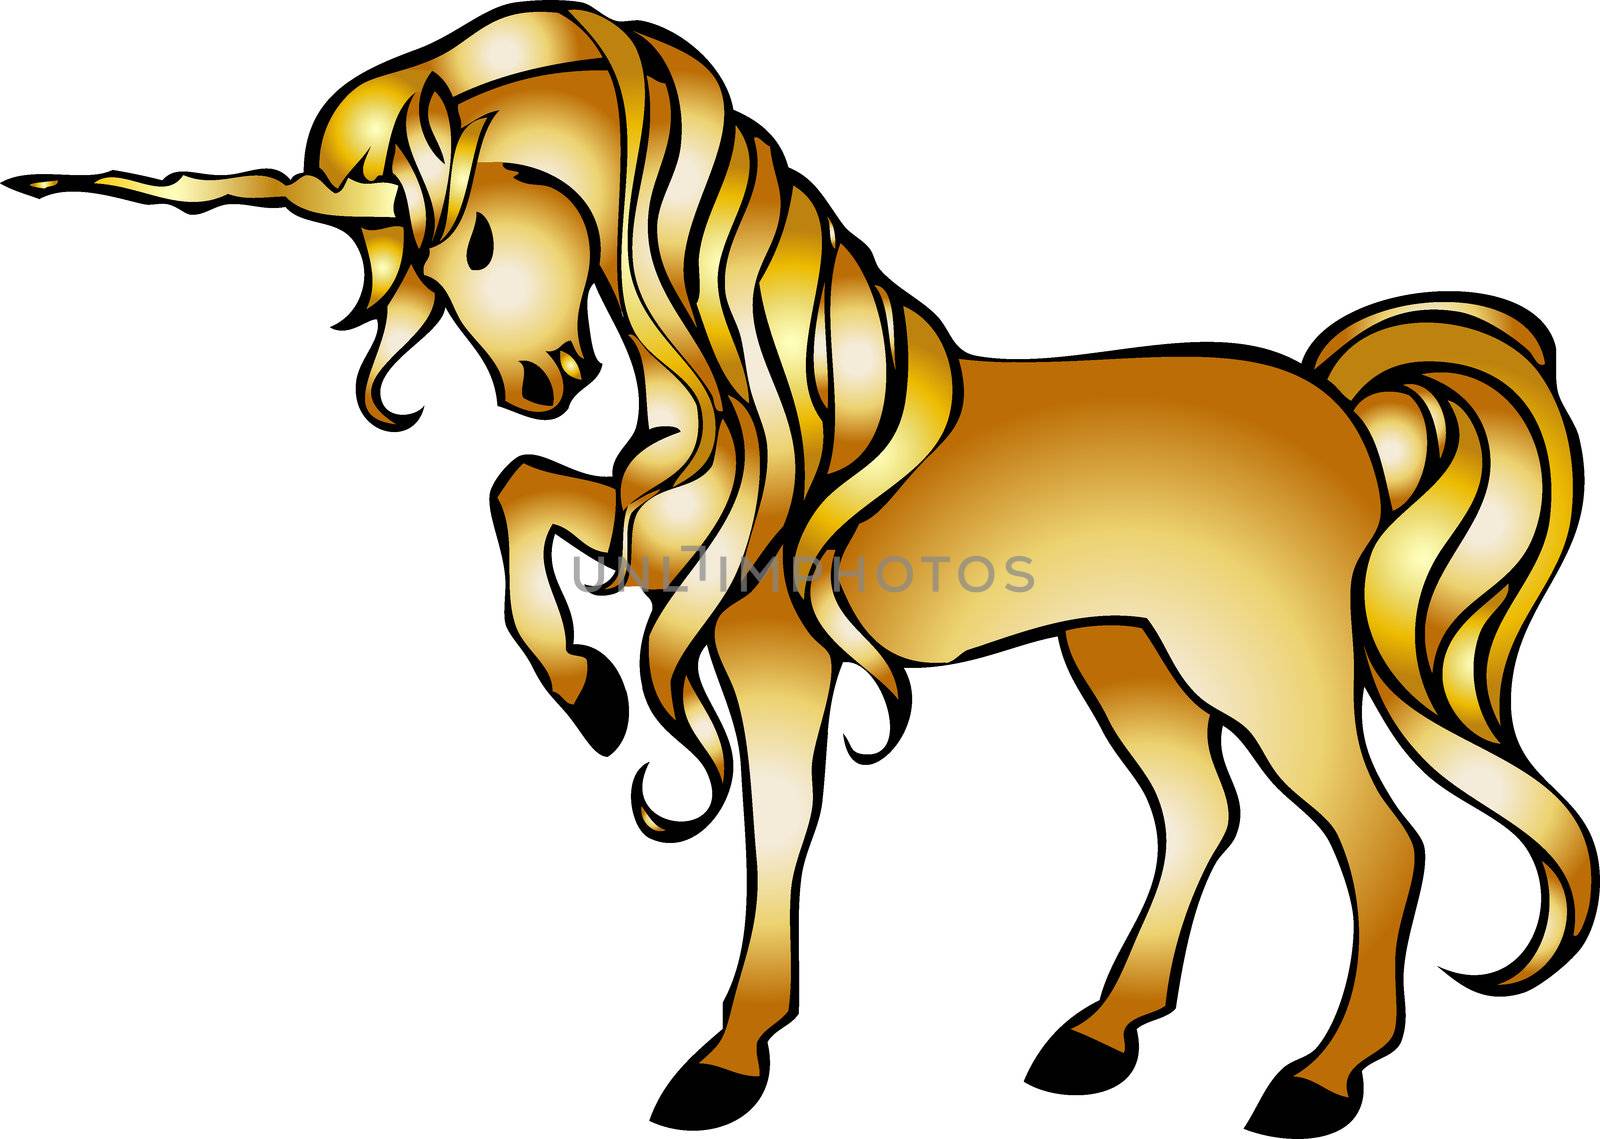 golden unicorn by peromarketing